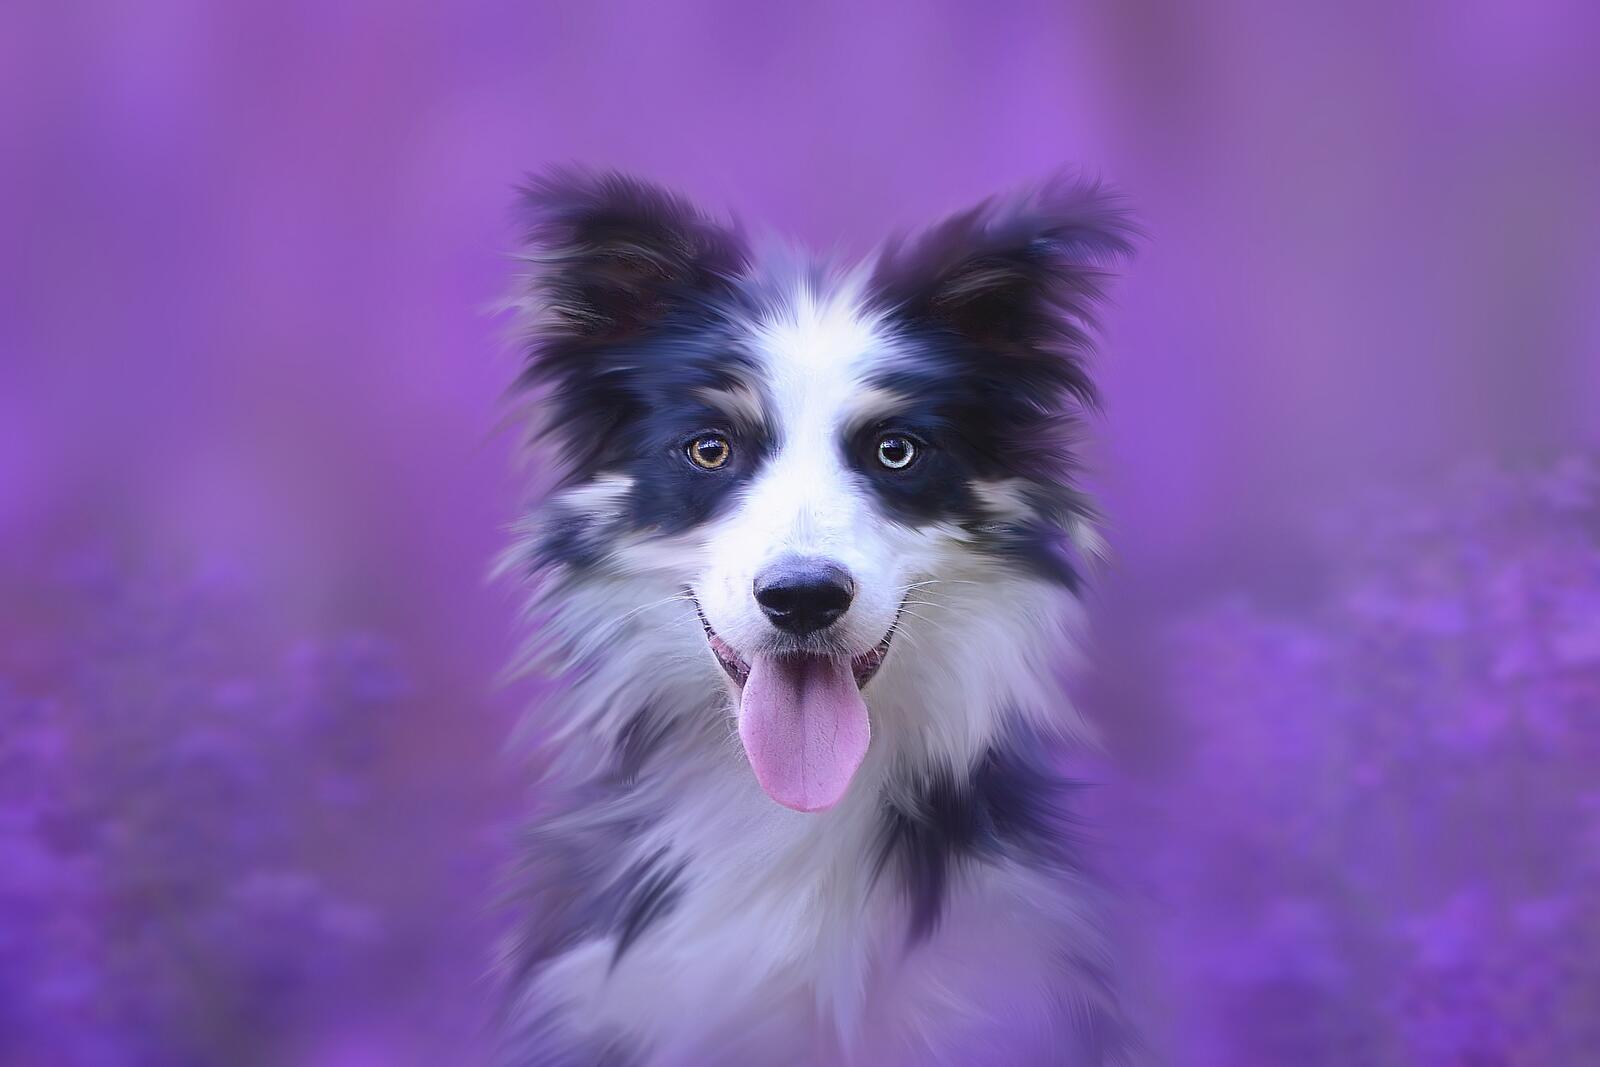 Wallpapers dog portrait animal on the desktop